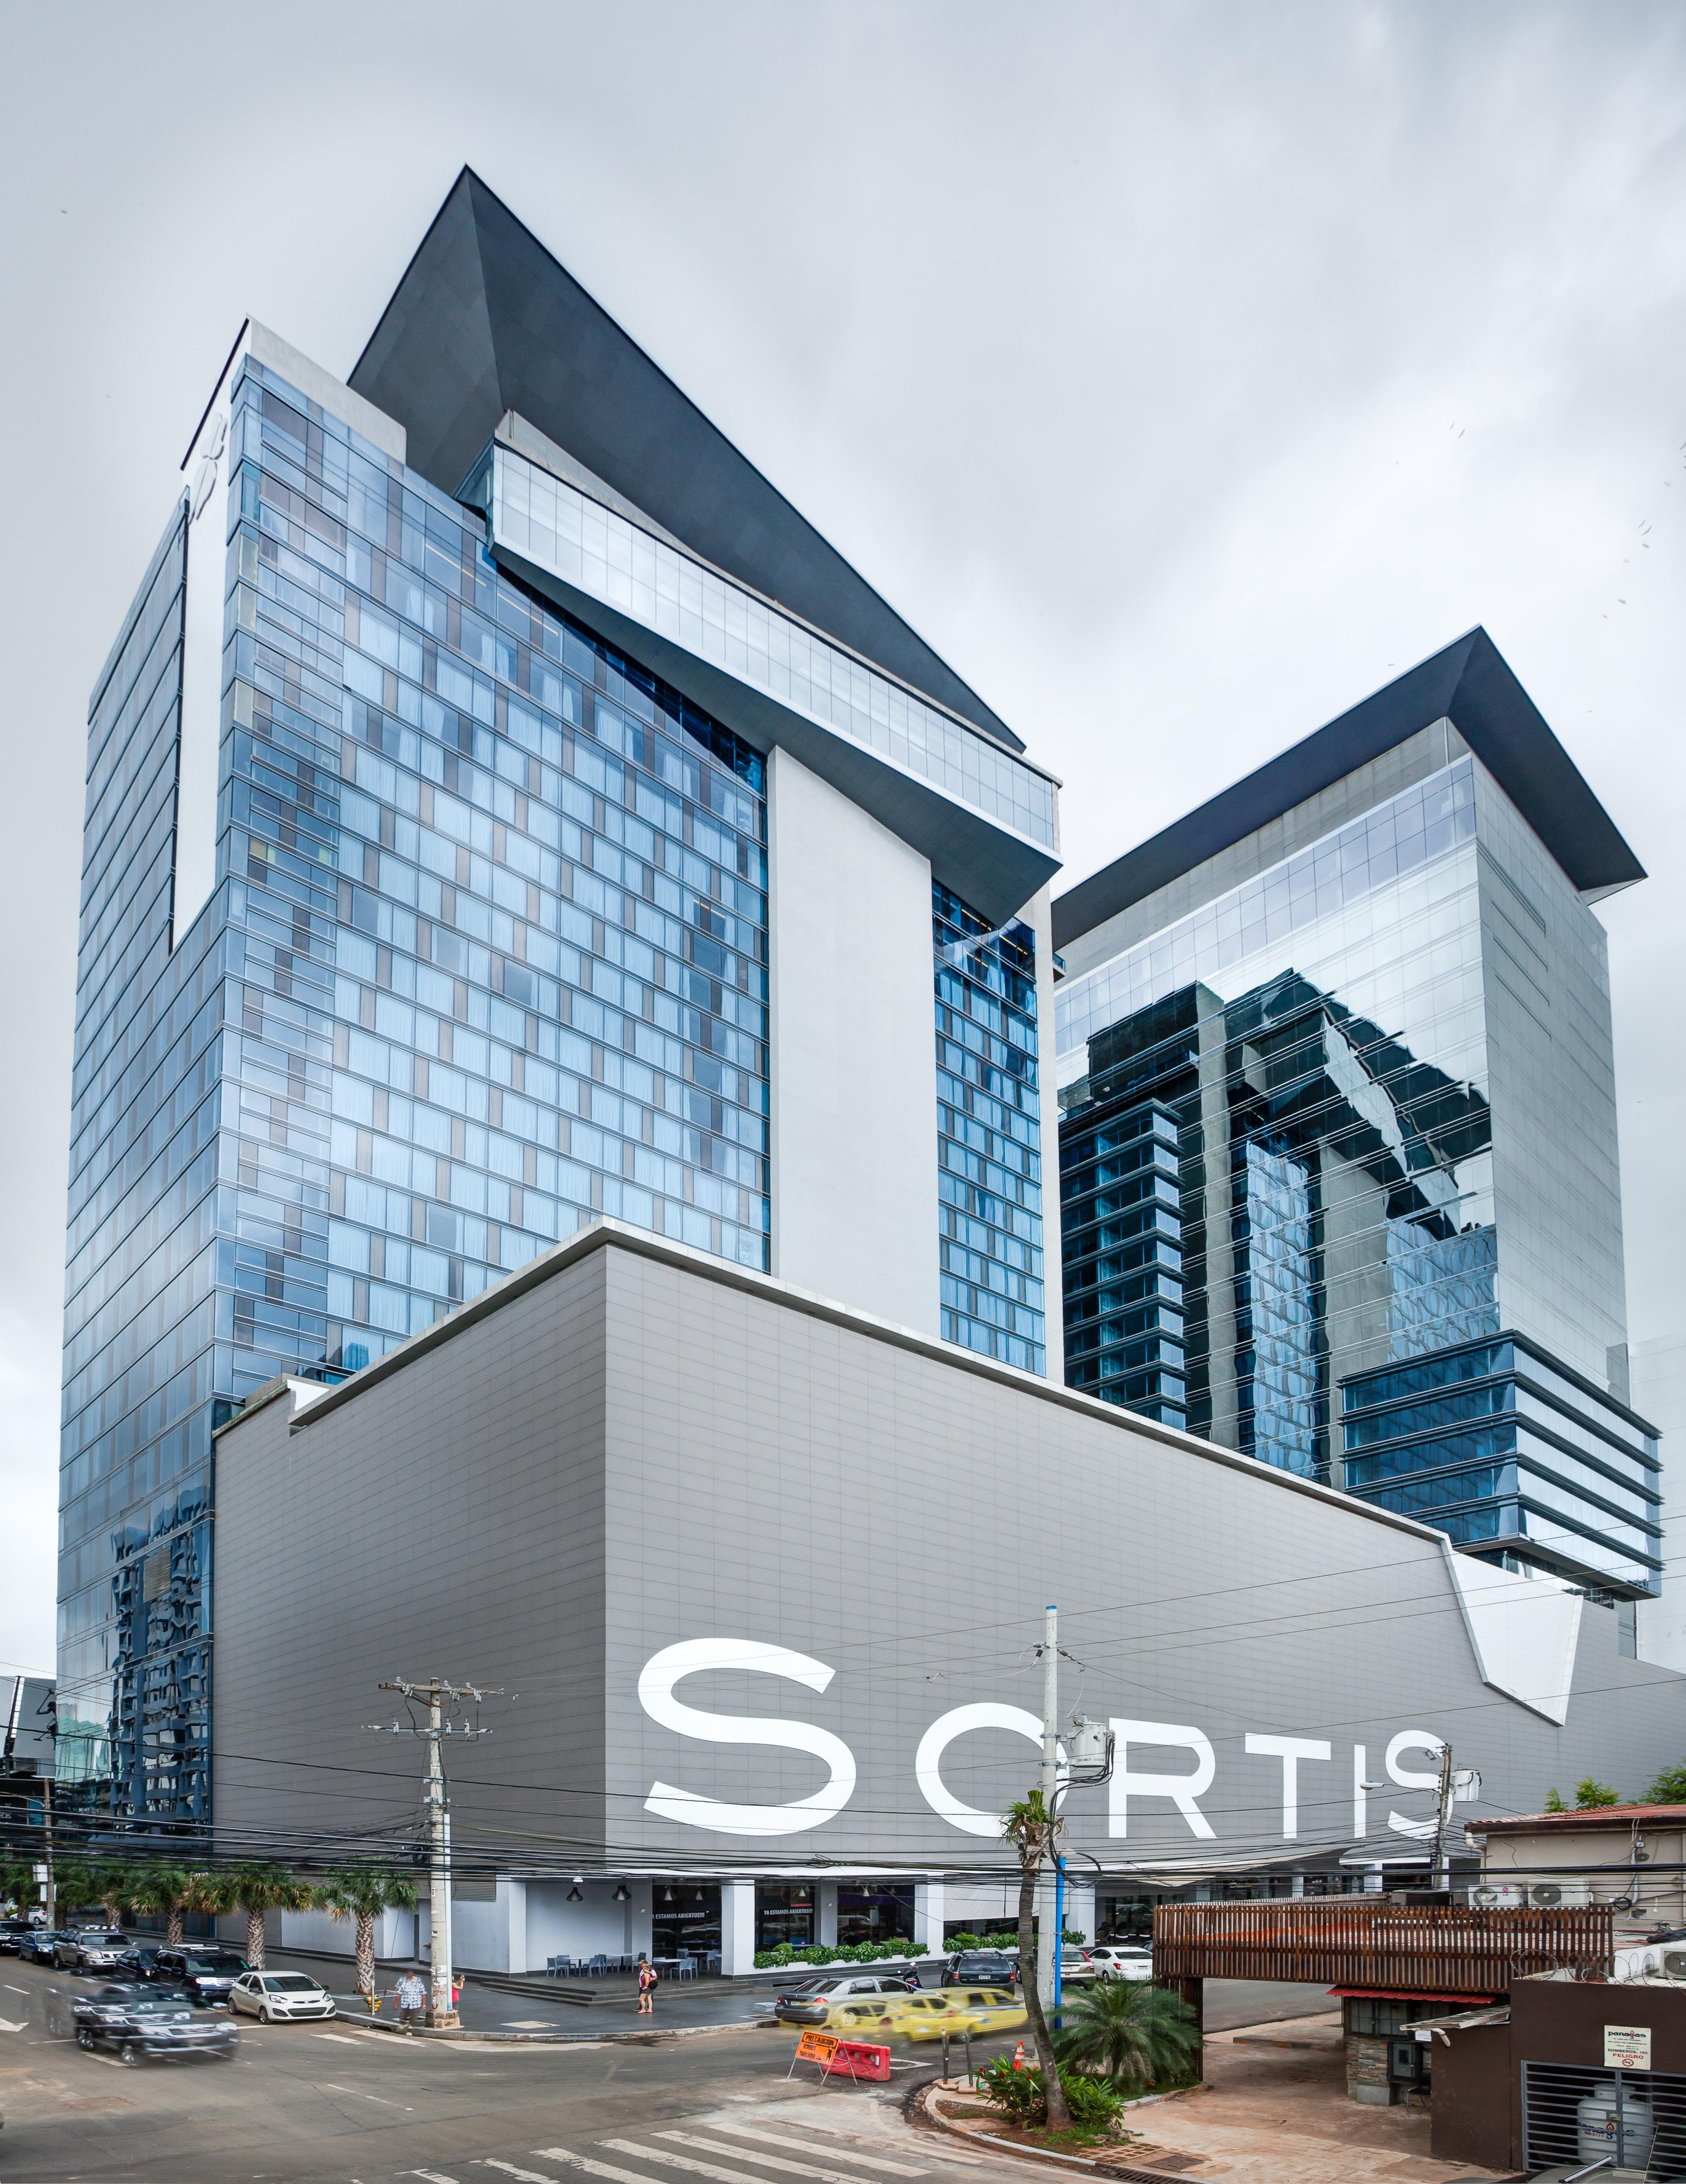 Sortis Hotel, Spa & Casino, Autograph Collection Панама Экстерьер фото